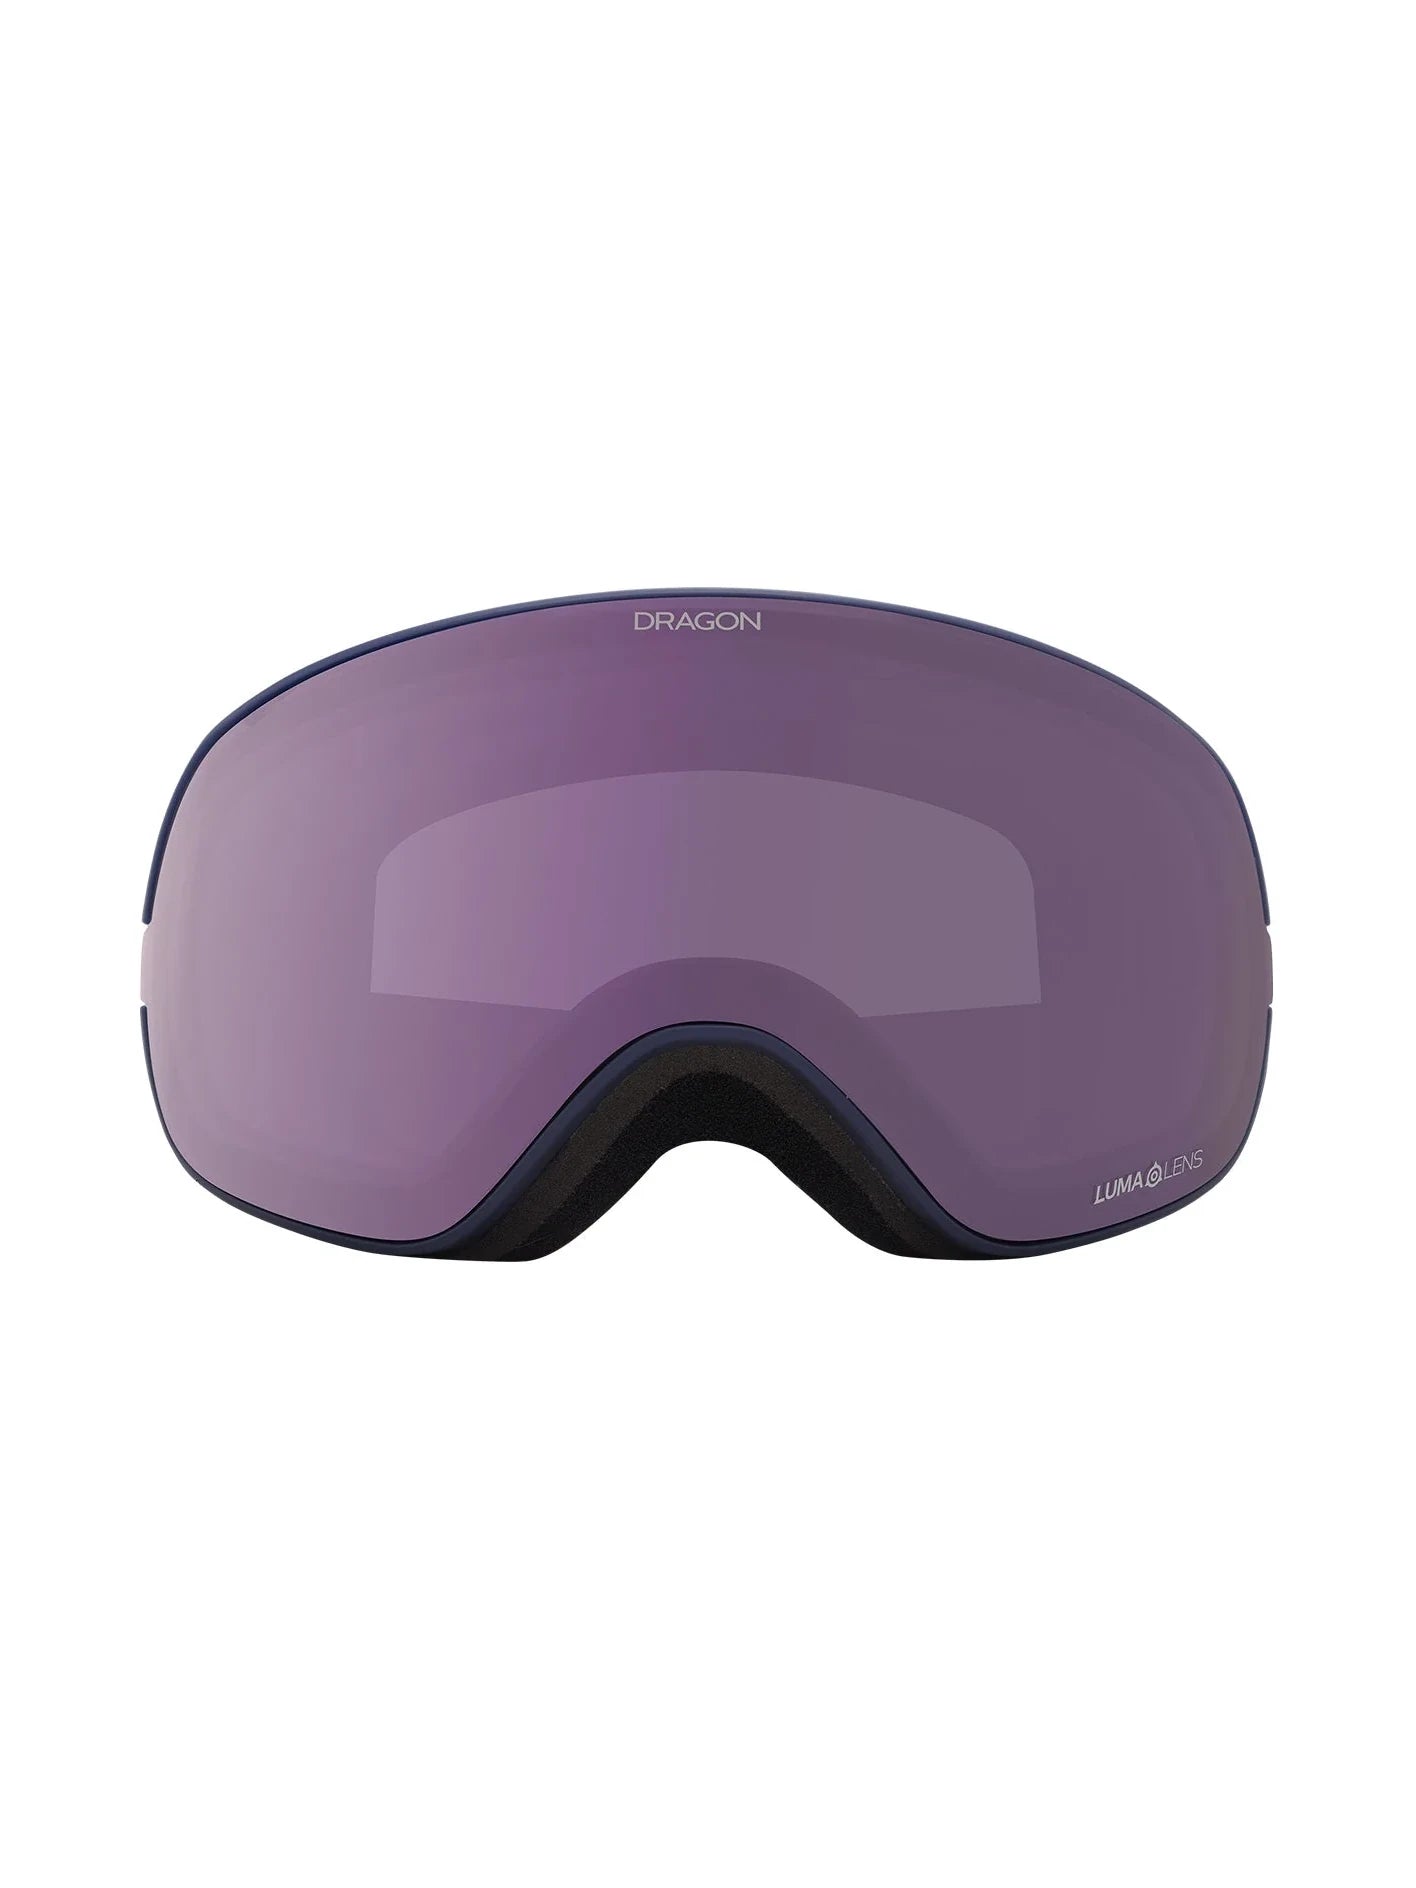 Dragon X2s - Shadow with Lumalens Violet & Lumalens Midnight Lens | Dragon | Gafas de snowboard | Snowboard Shop | surfdevils.com